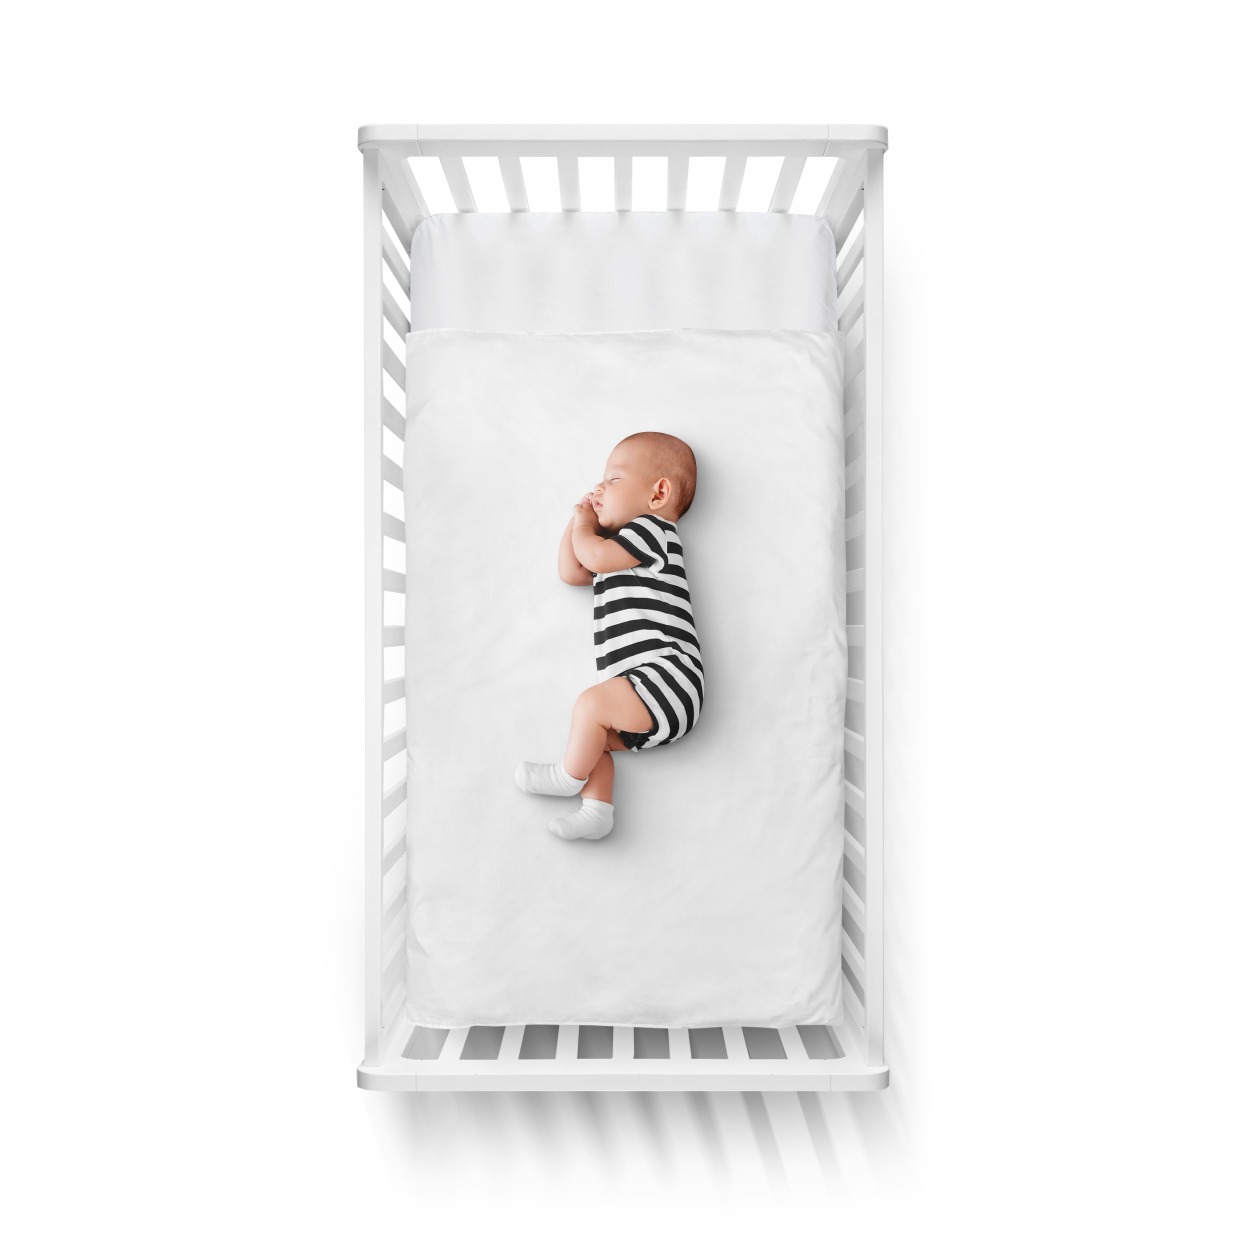 baby sleeping in a crib | Batelle